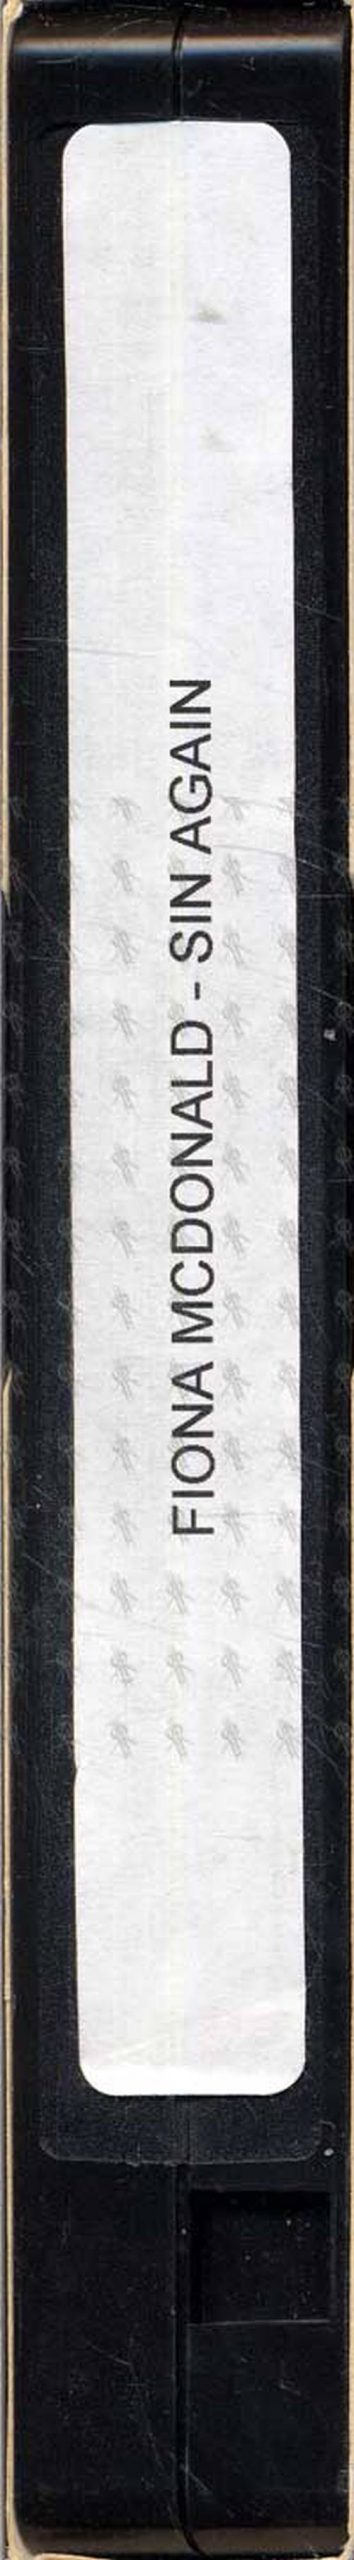 McDONALD-- FIONA - Sin Again - 1